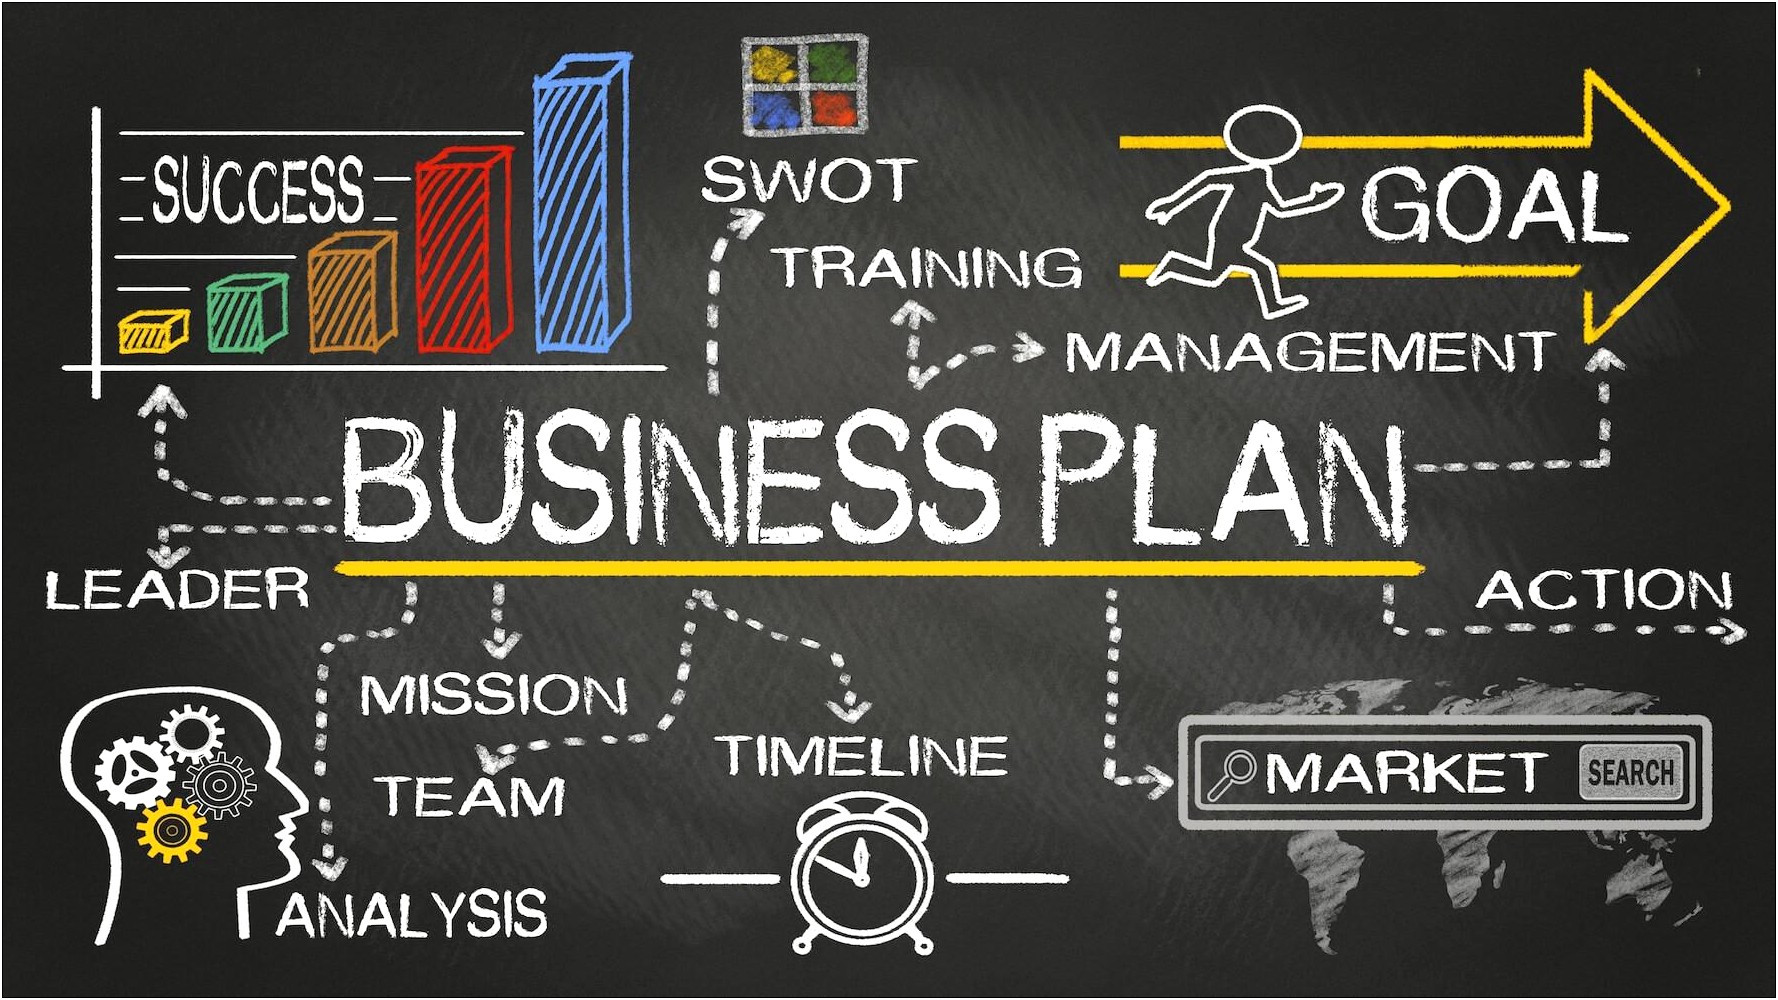 5 Year Strategic Business Plan Template Free